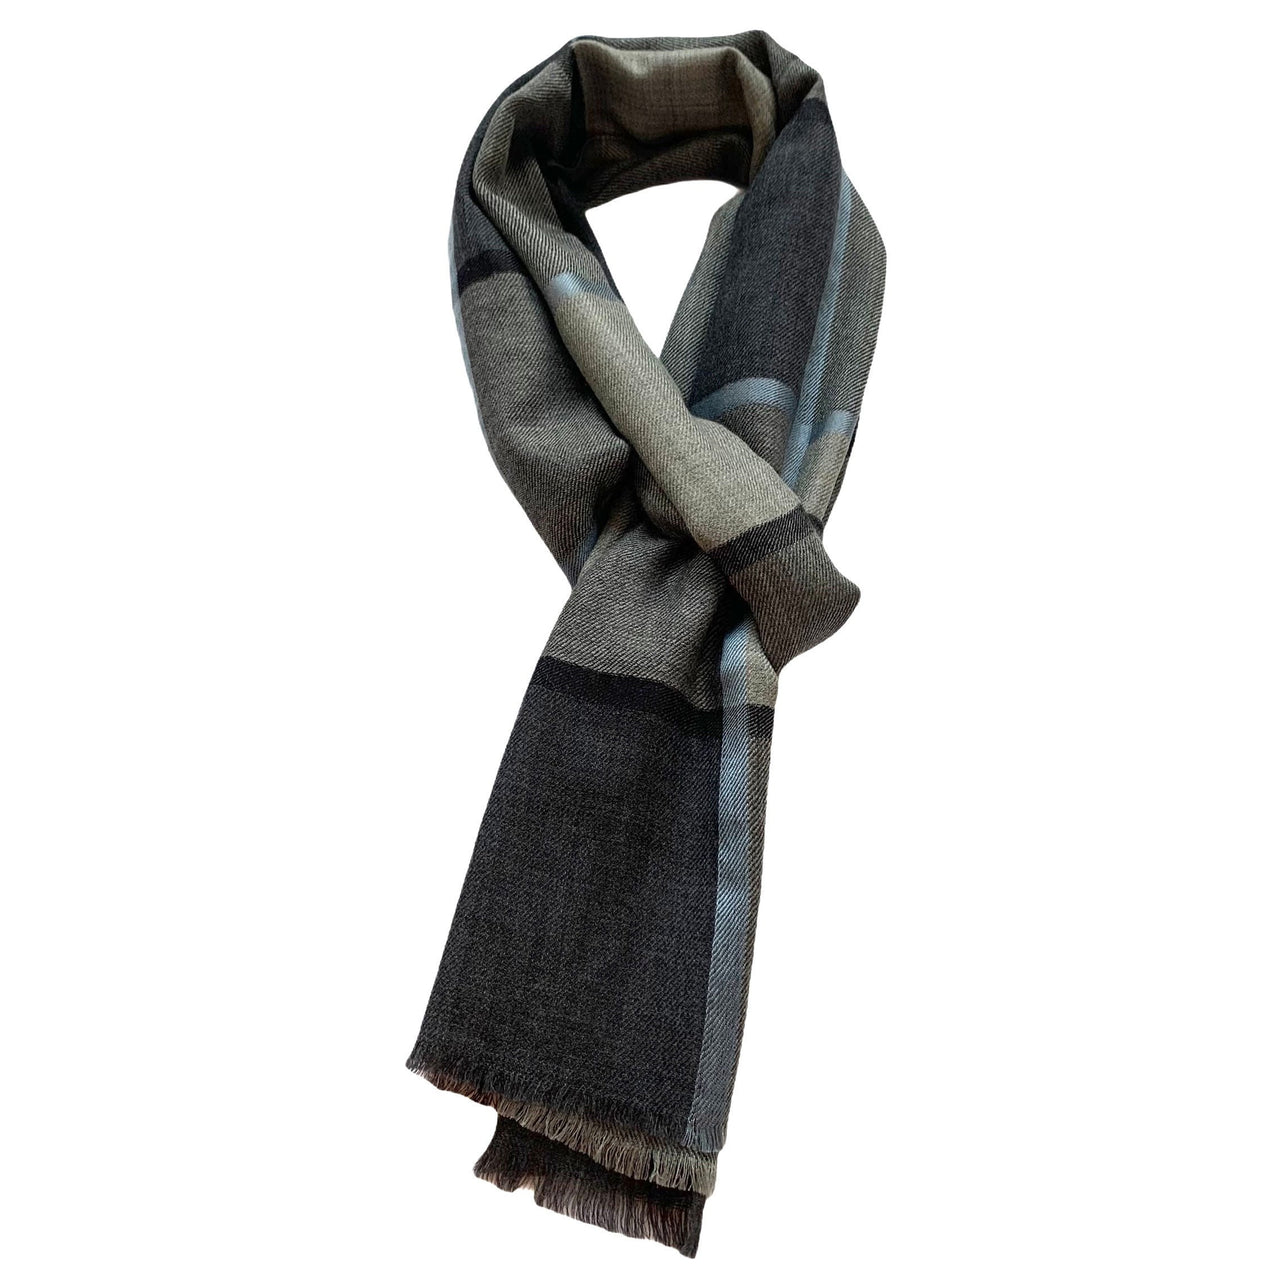 Cashmere Silk Grey/Charcoal unisex Scarf/Shawl/Wrap/Stole 28x76 inches